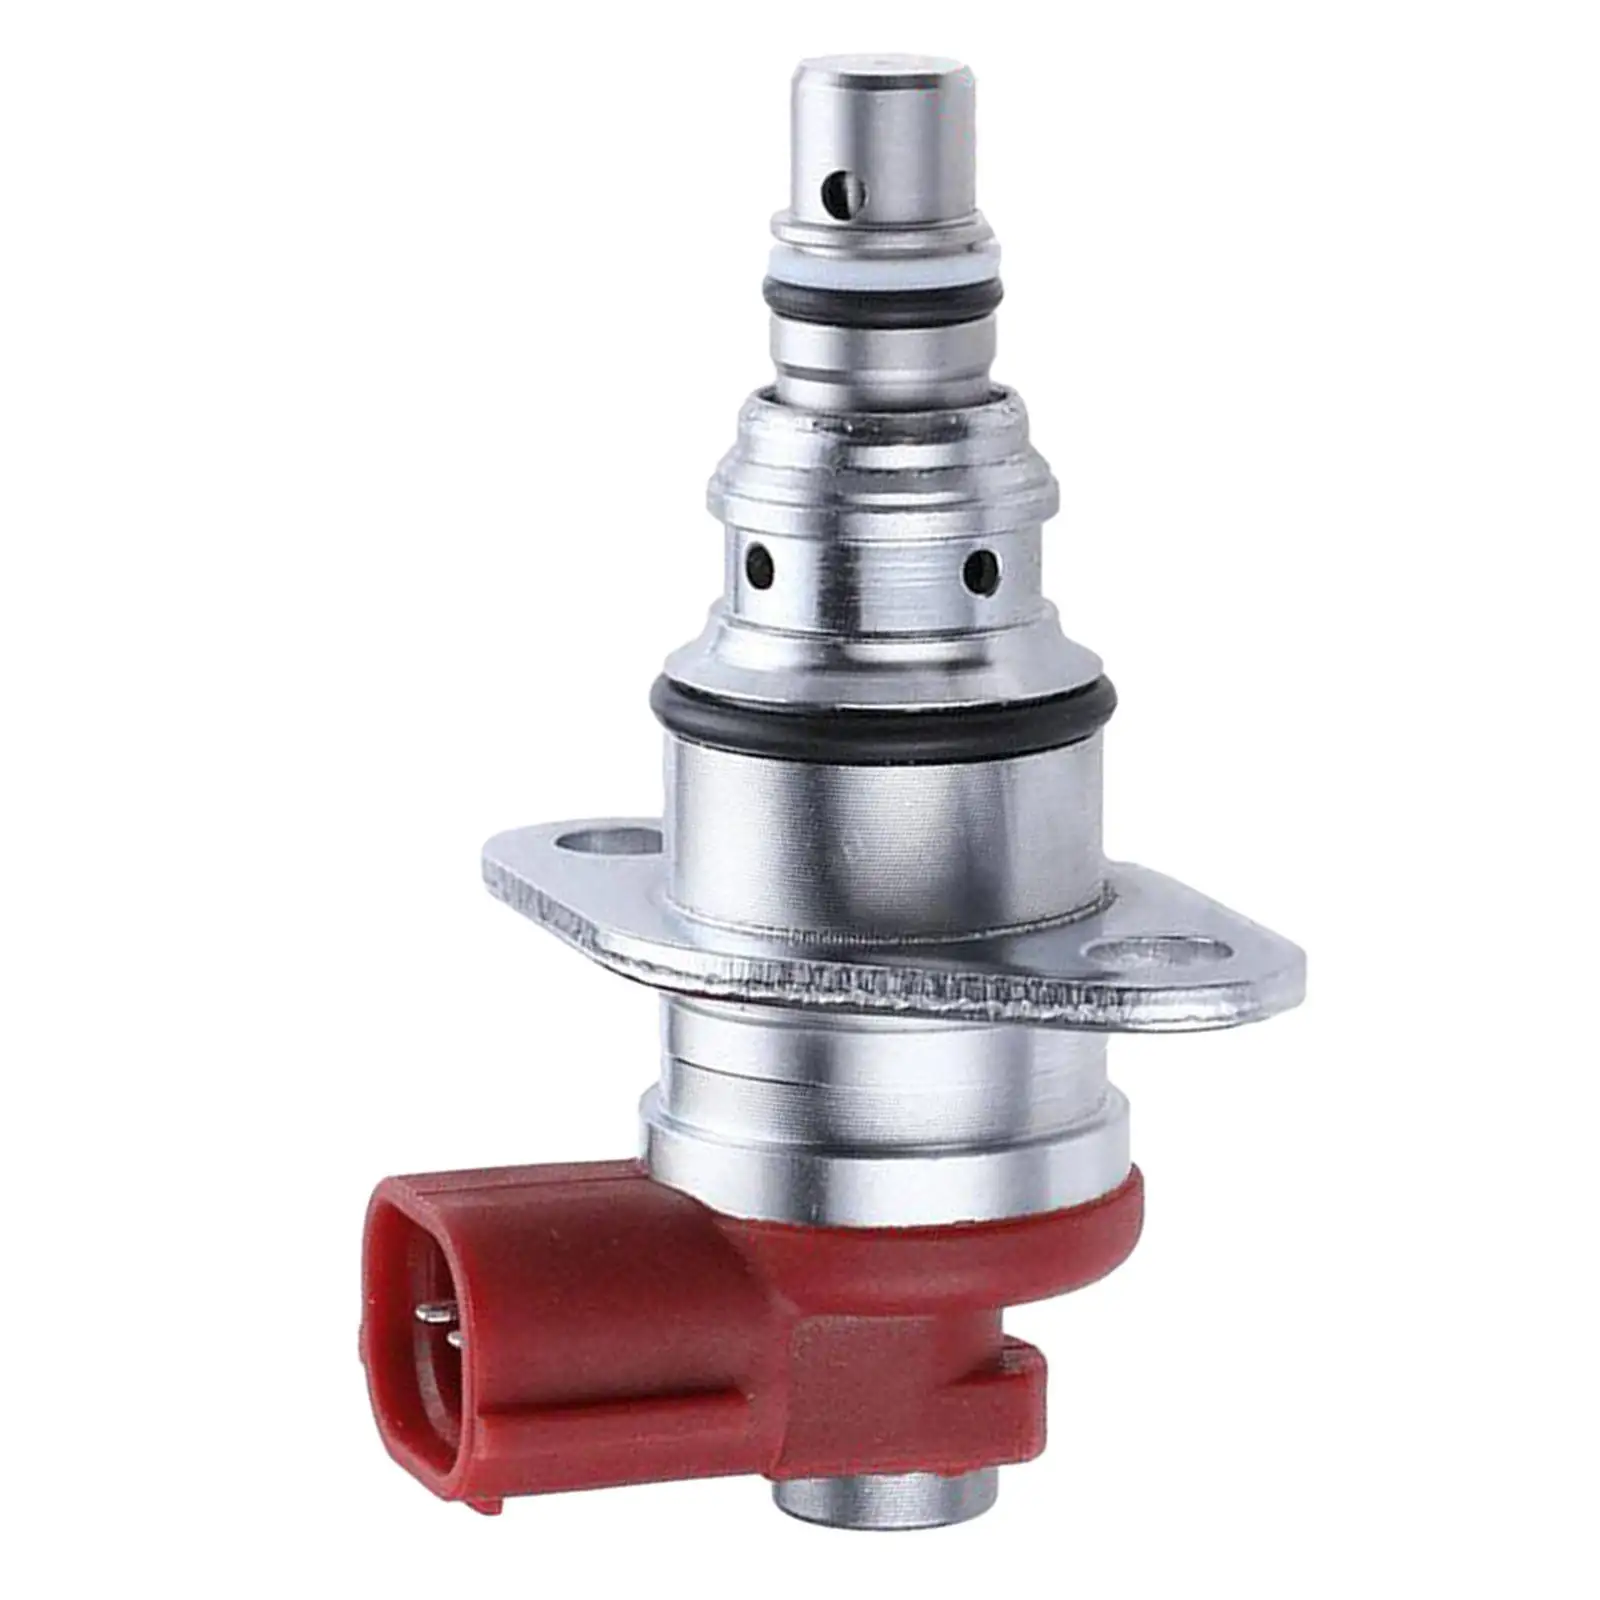 Fuel Suction Control Valve Replace 096710-0120 Accessories Pressure Fuel Pump Regulator Scv for RAV 4 Corolla Hiace